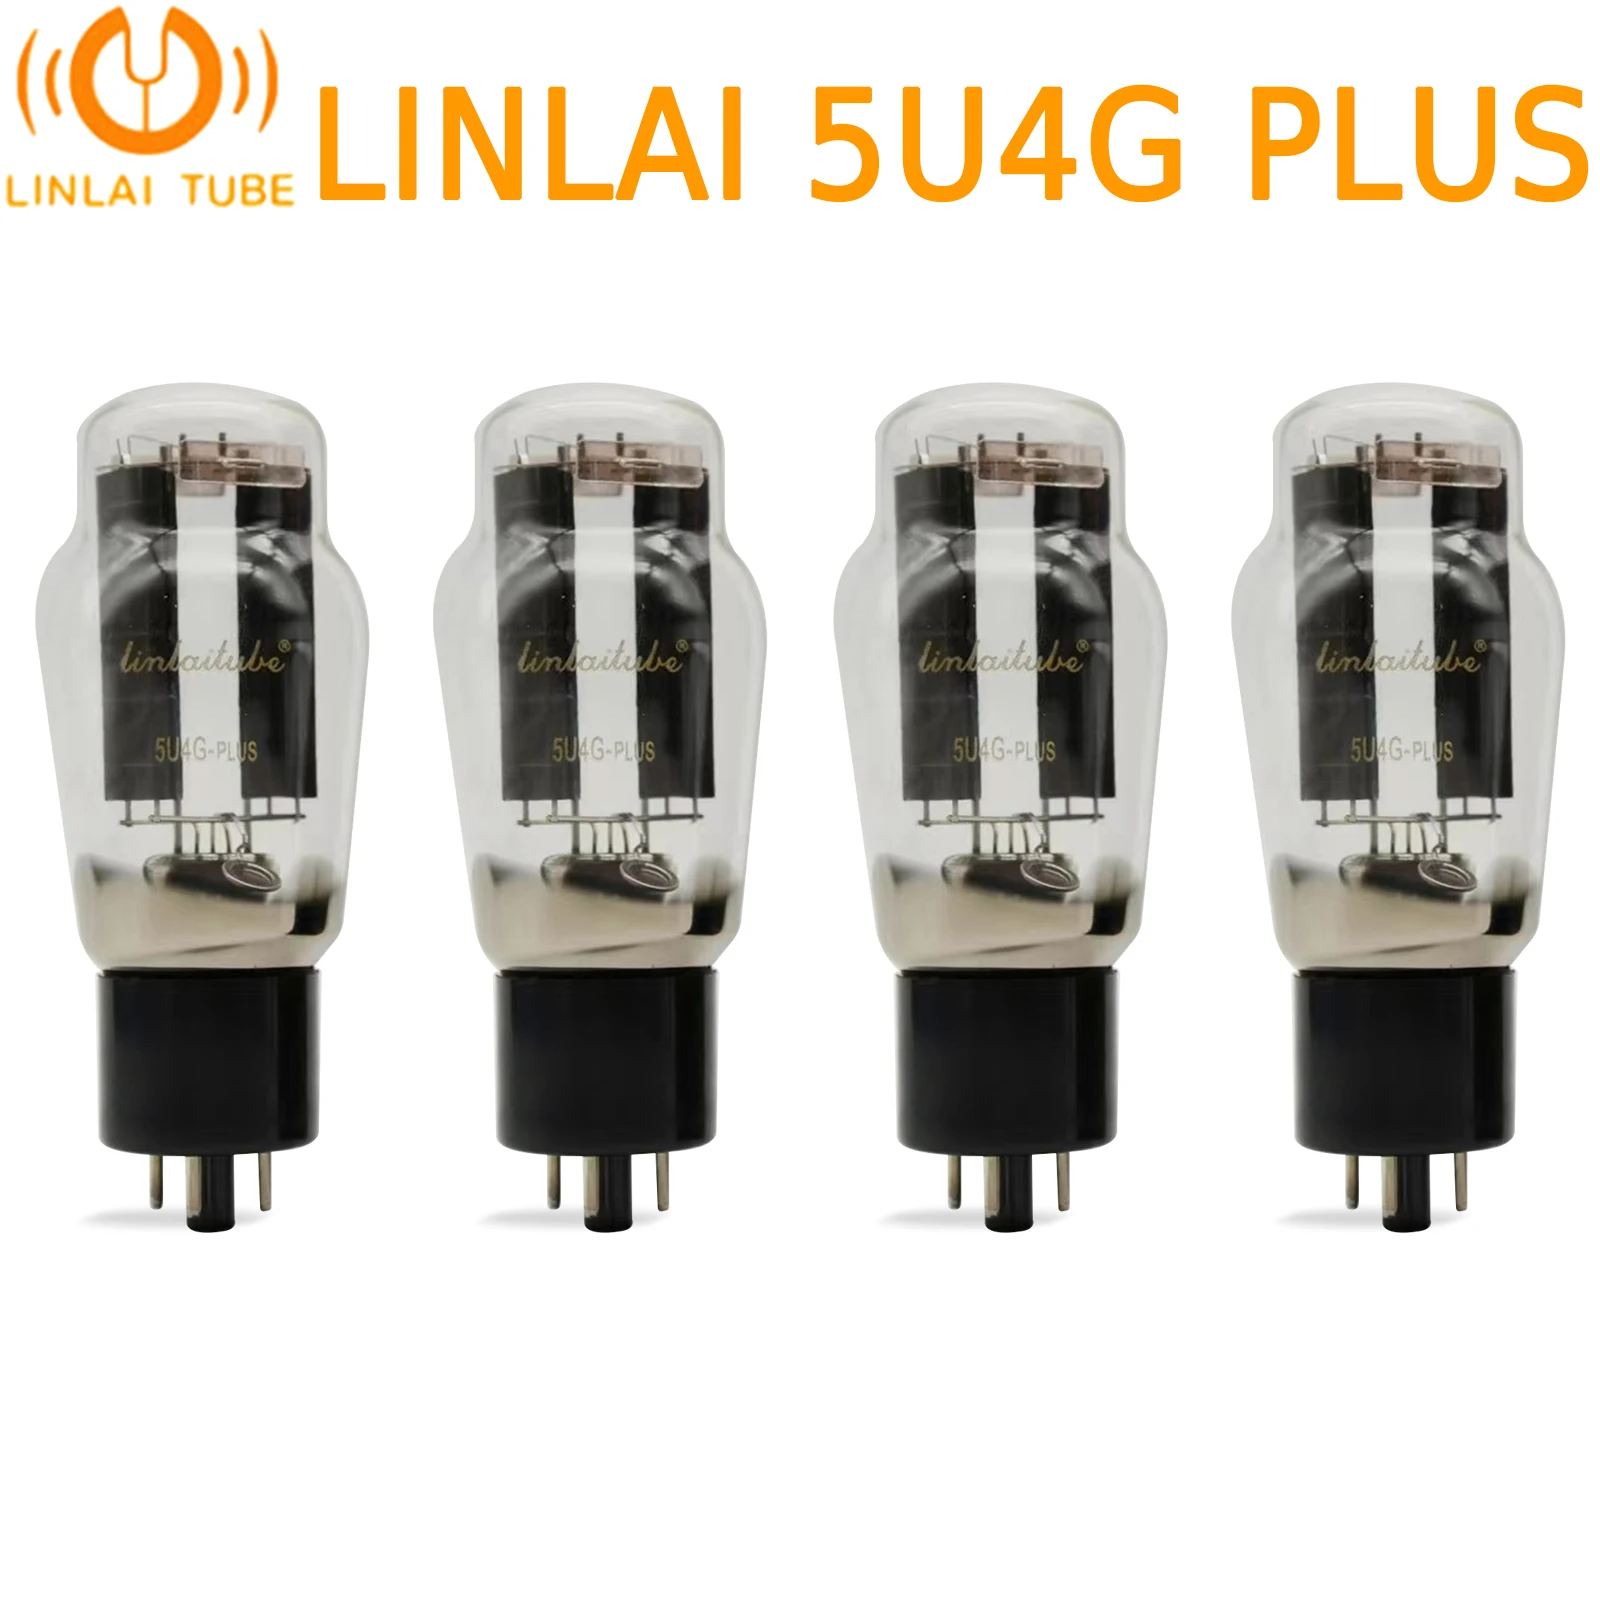 

LINLAI 5U4G PLUS Vacuum Tube Rectification Replace 274B 5Z3P 5AR4 5Z3P 5Z4P GZ34 Electronic Tube Amplifier Kit DIY Audio Valve